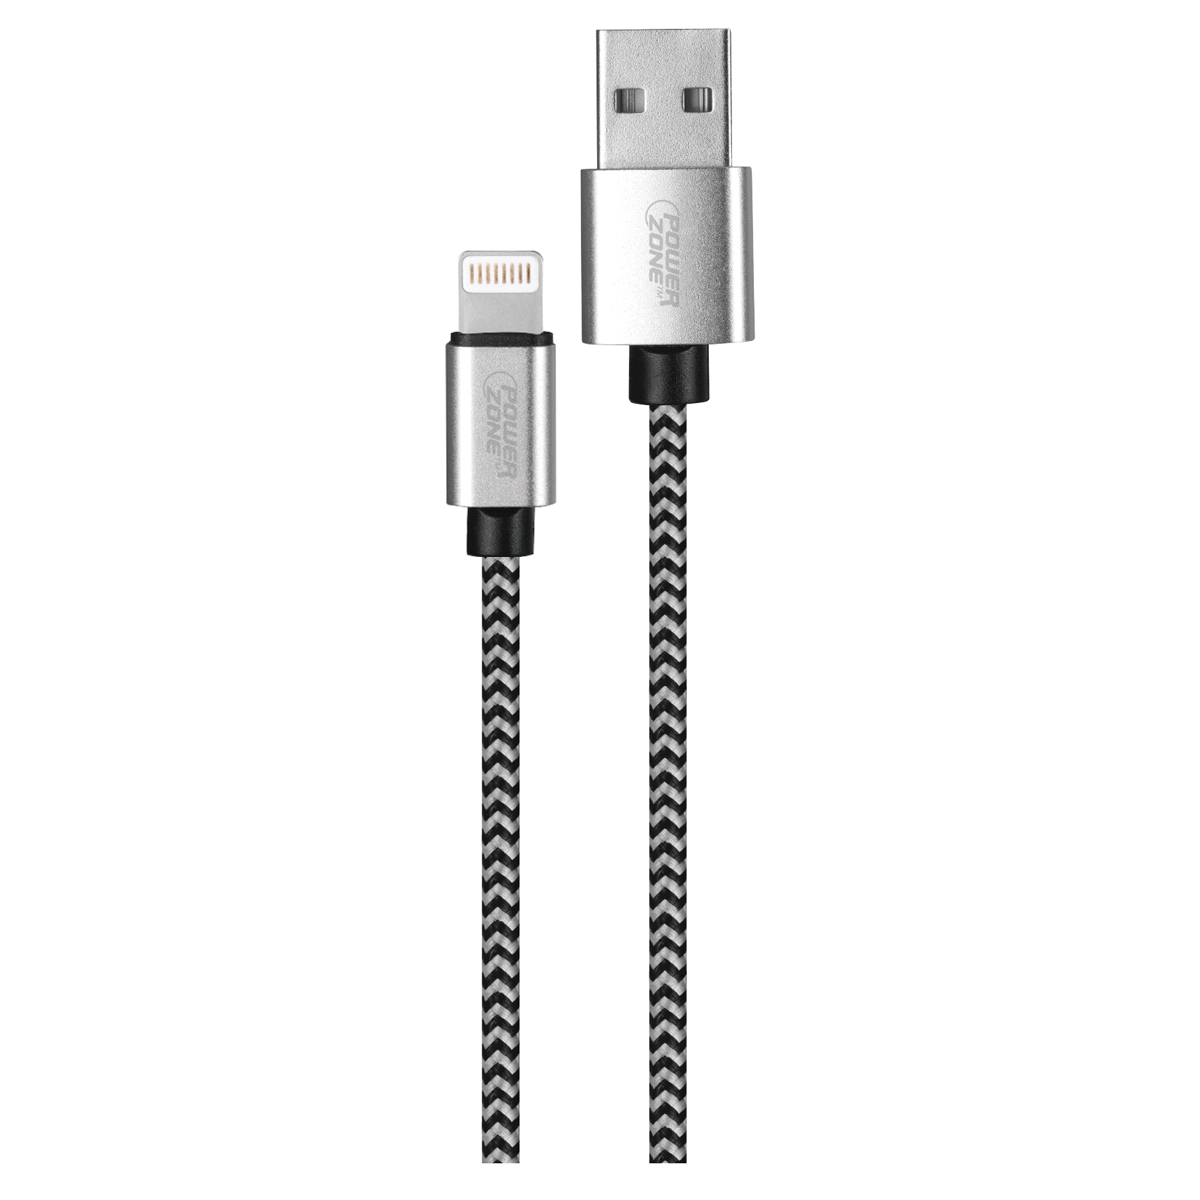 PowerZone KL-029X-1M-LIGHT Lightning Charging Cable, Lightning, USB, Black/White Sheath, 3 ft L